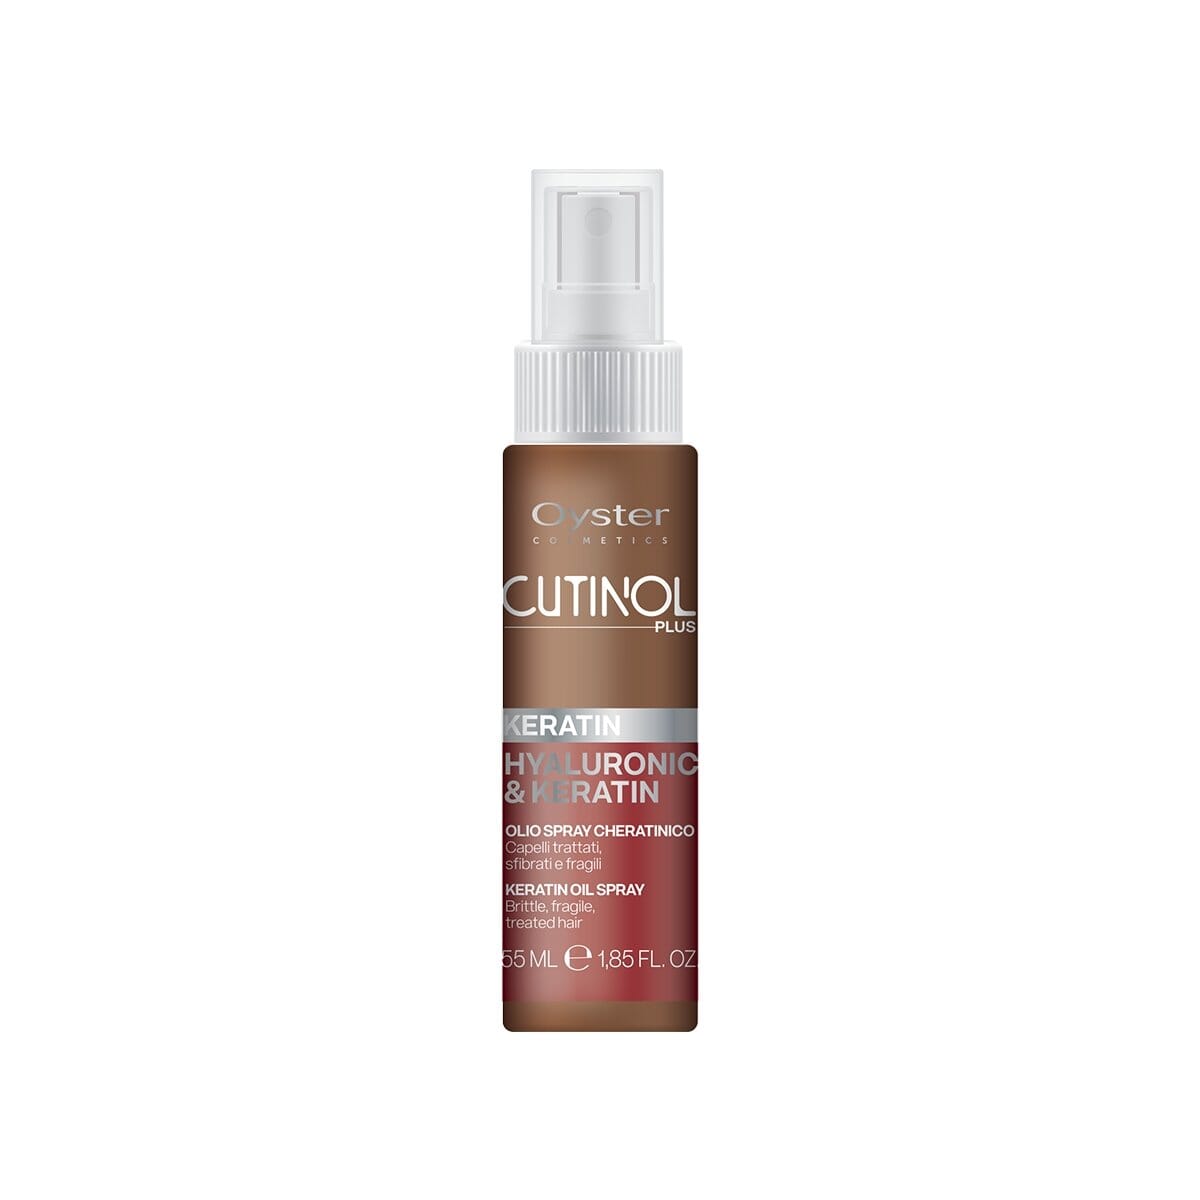 Keratin Oil Spray | Hyaluronic & Keratin | 1.85 fl.oz. | Cutinol Plus | OYSTER HAIR CARE OYSTER 